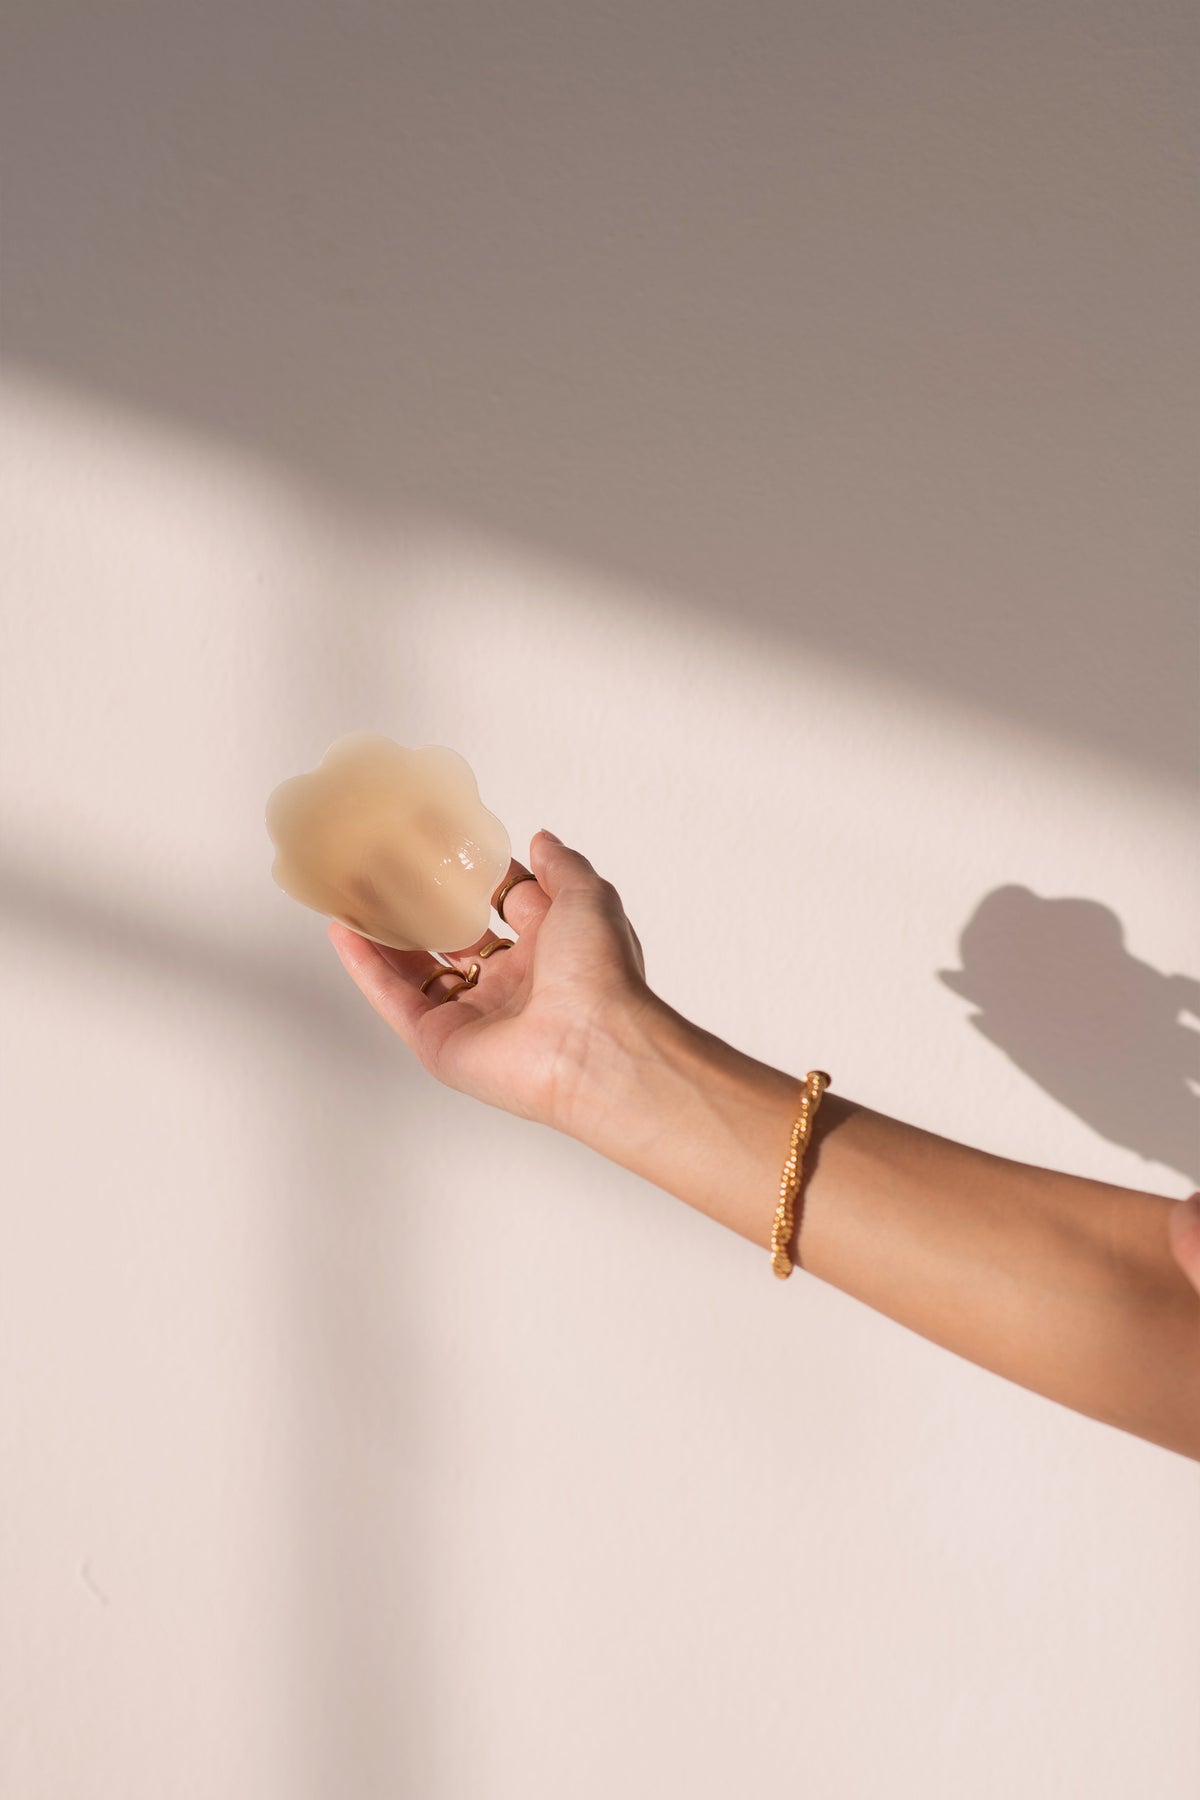 Buy NOOD No-Show Nipple Covers Reusable Sweatproof Waterproof Seamless  Silicon Nipple Pasties Online